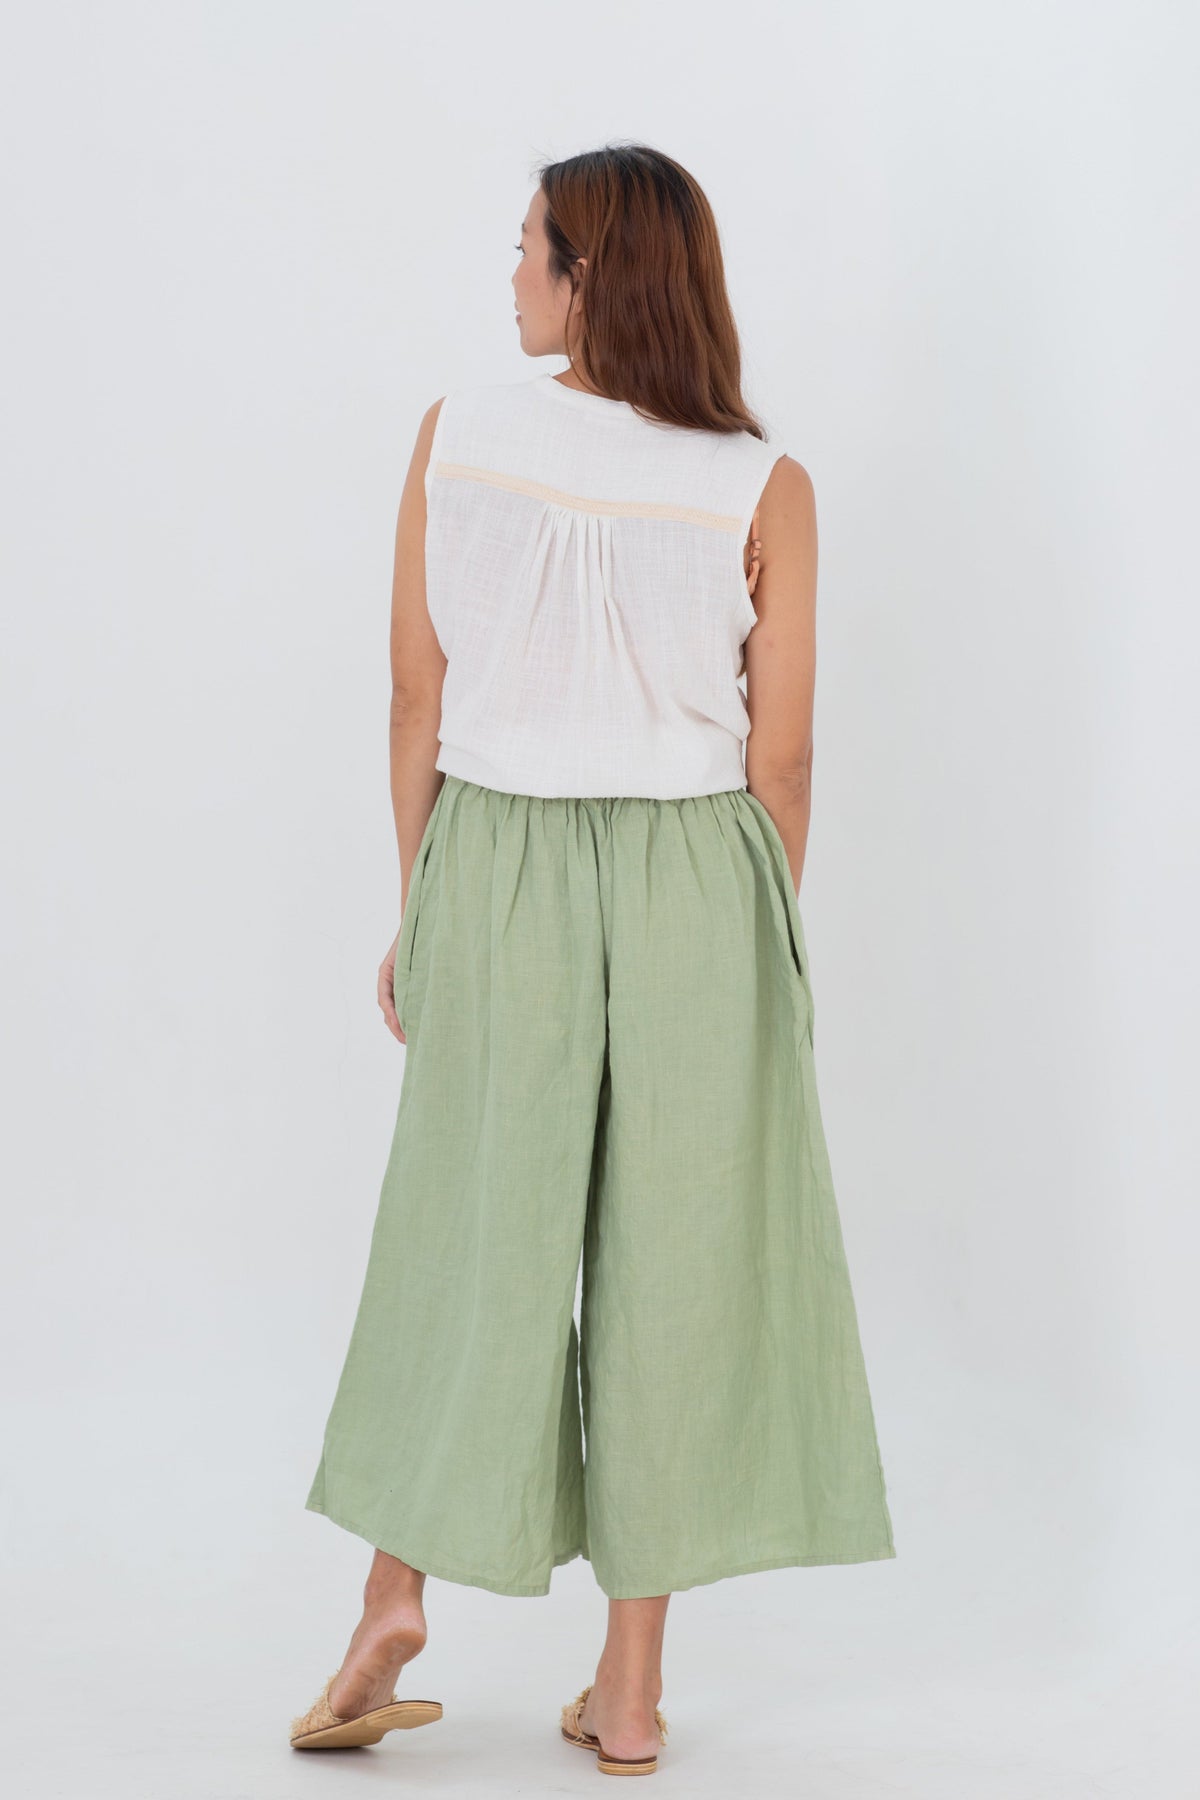 Linen Gaucho Pants Indigo/Terracotta/Leaf Green/Cream Yellow